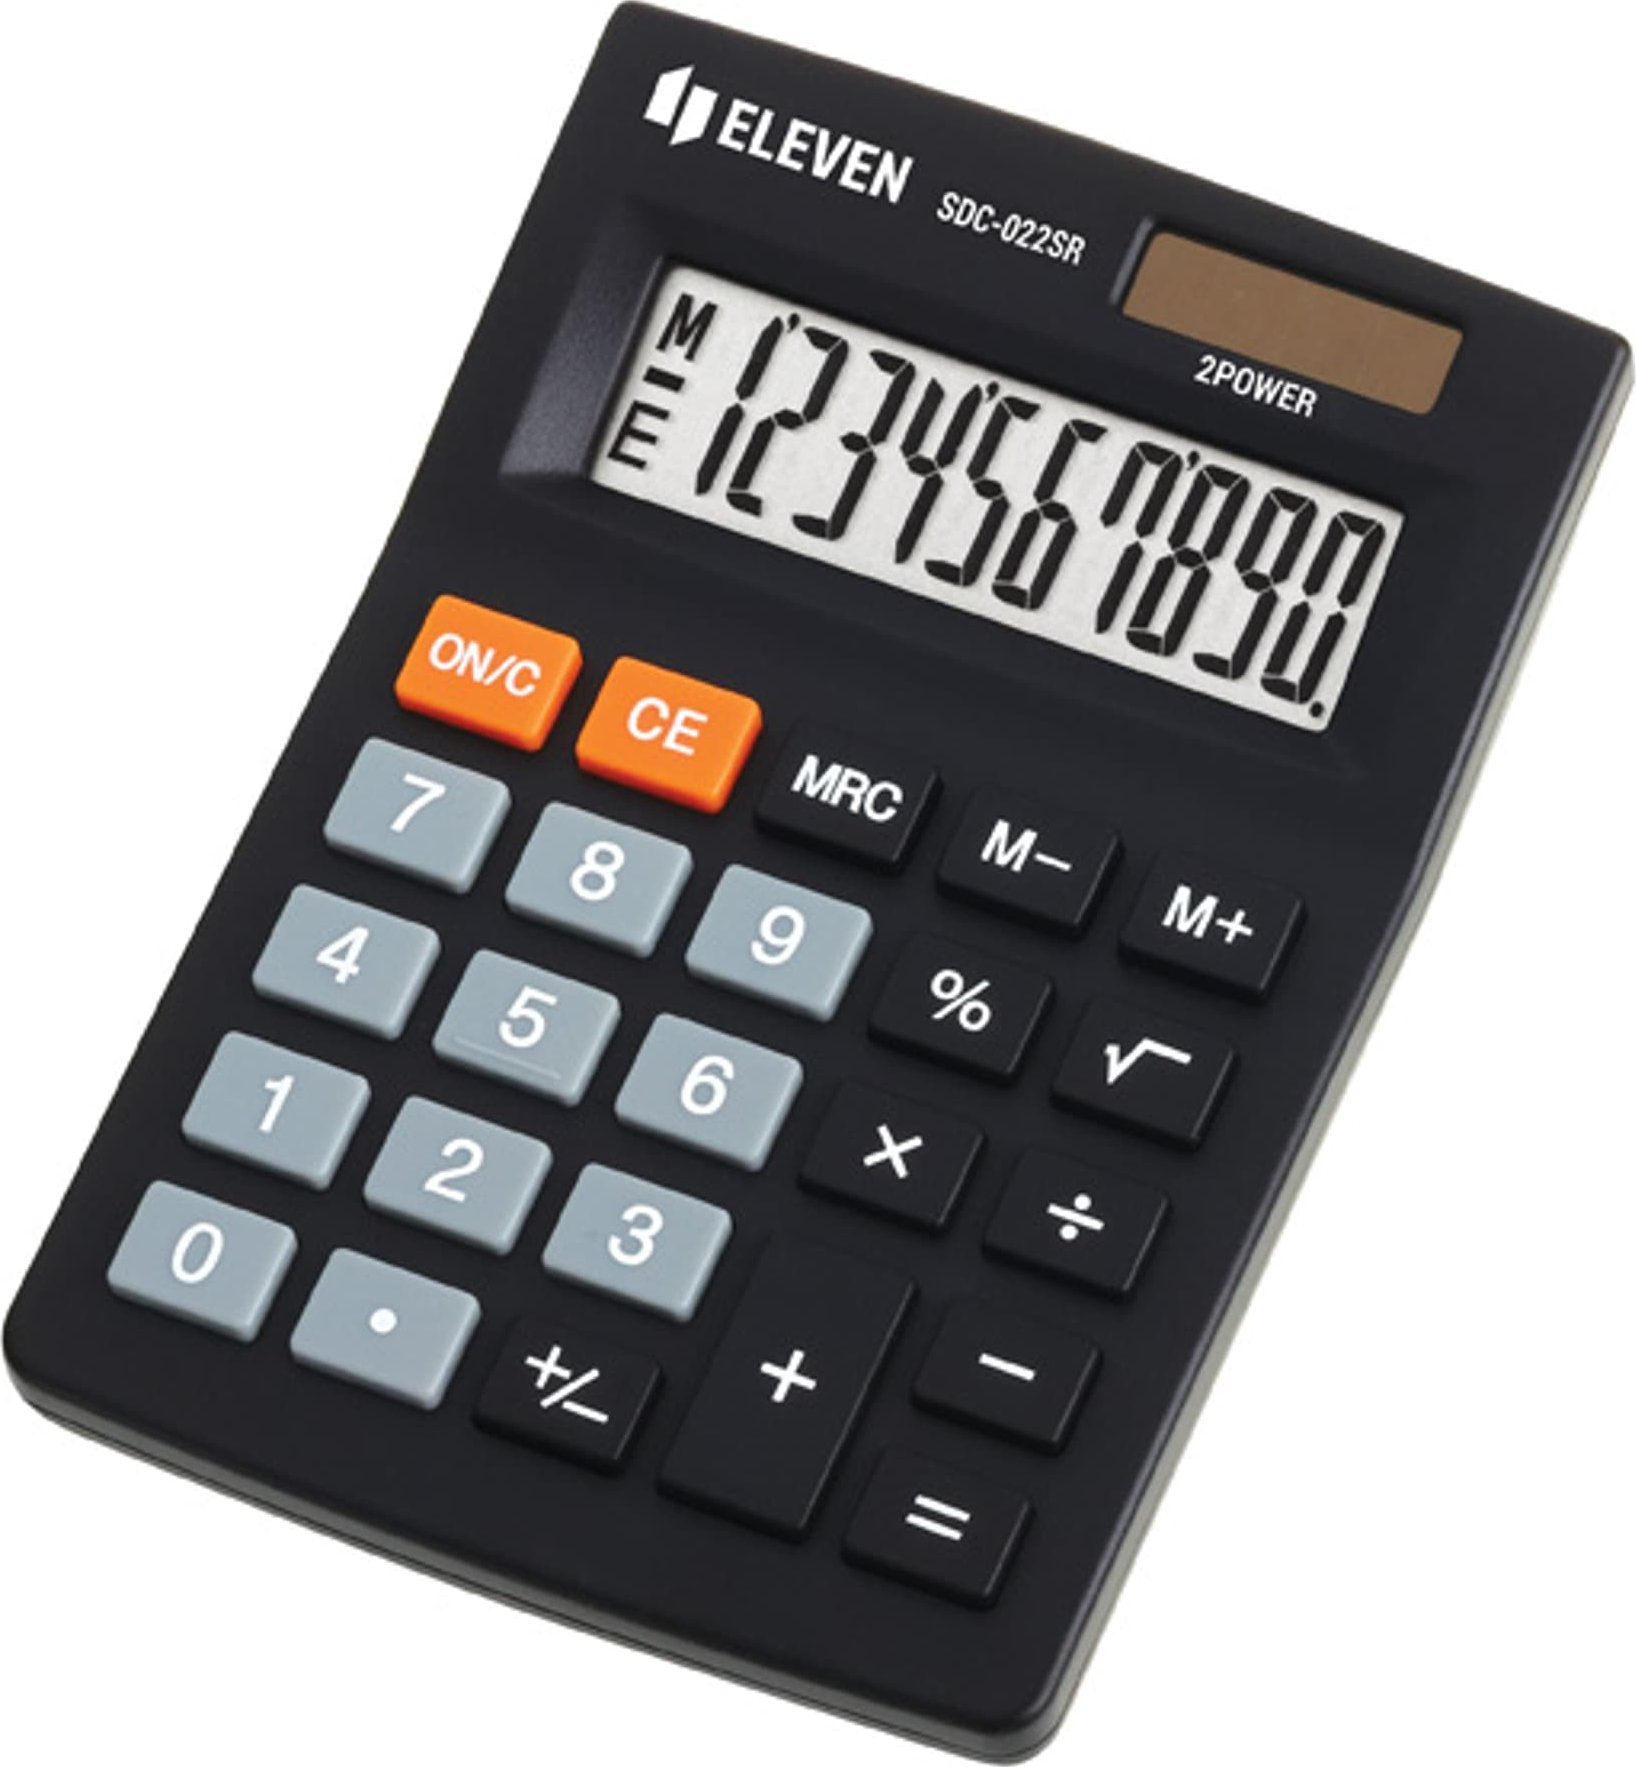 Kalkulator Eleven Eleven Kalkulator SDC022SR, czarna, biurkowy, 10 miejsc, podwojne zasilanie SDC-022SR (5904966860096) kalkulators